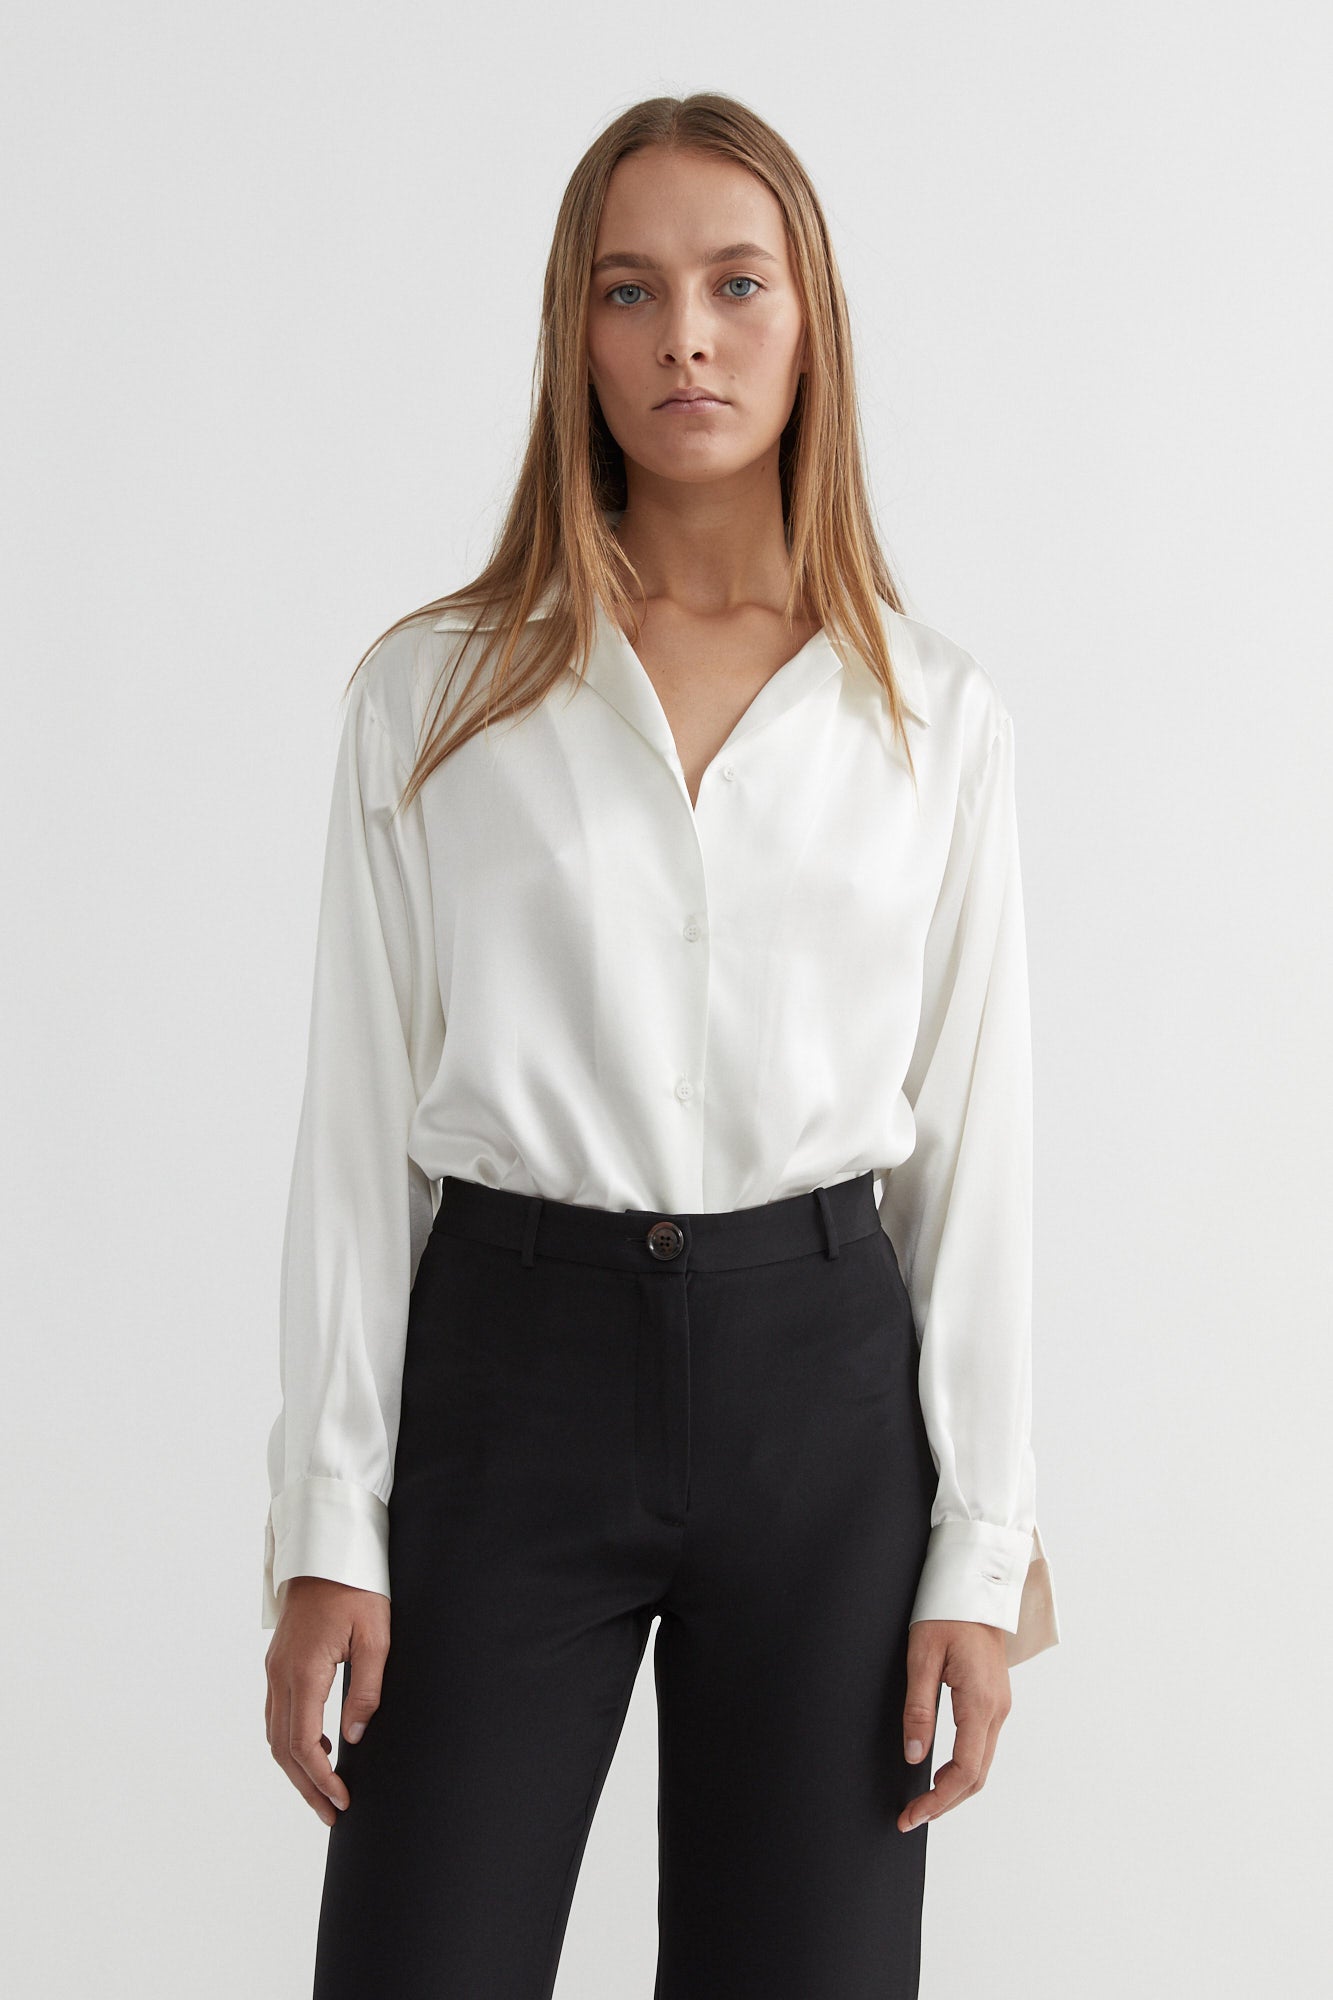 SAINT Lookbook Classic Silk Shirt in pearl / natural / white / cream silk satin, long sleeve button up. Made in Australia